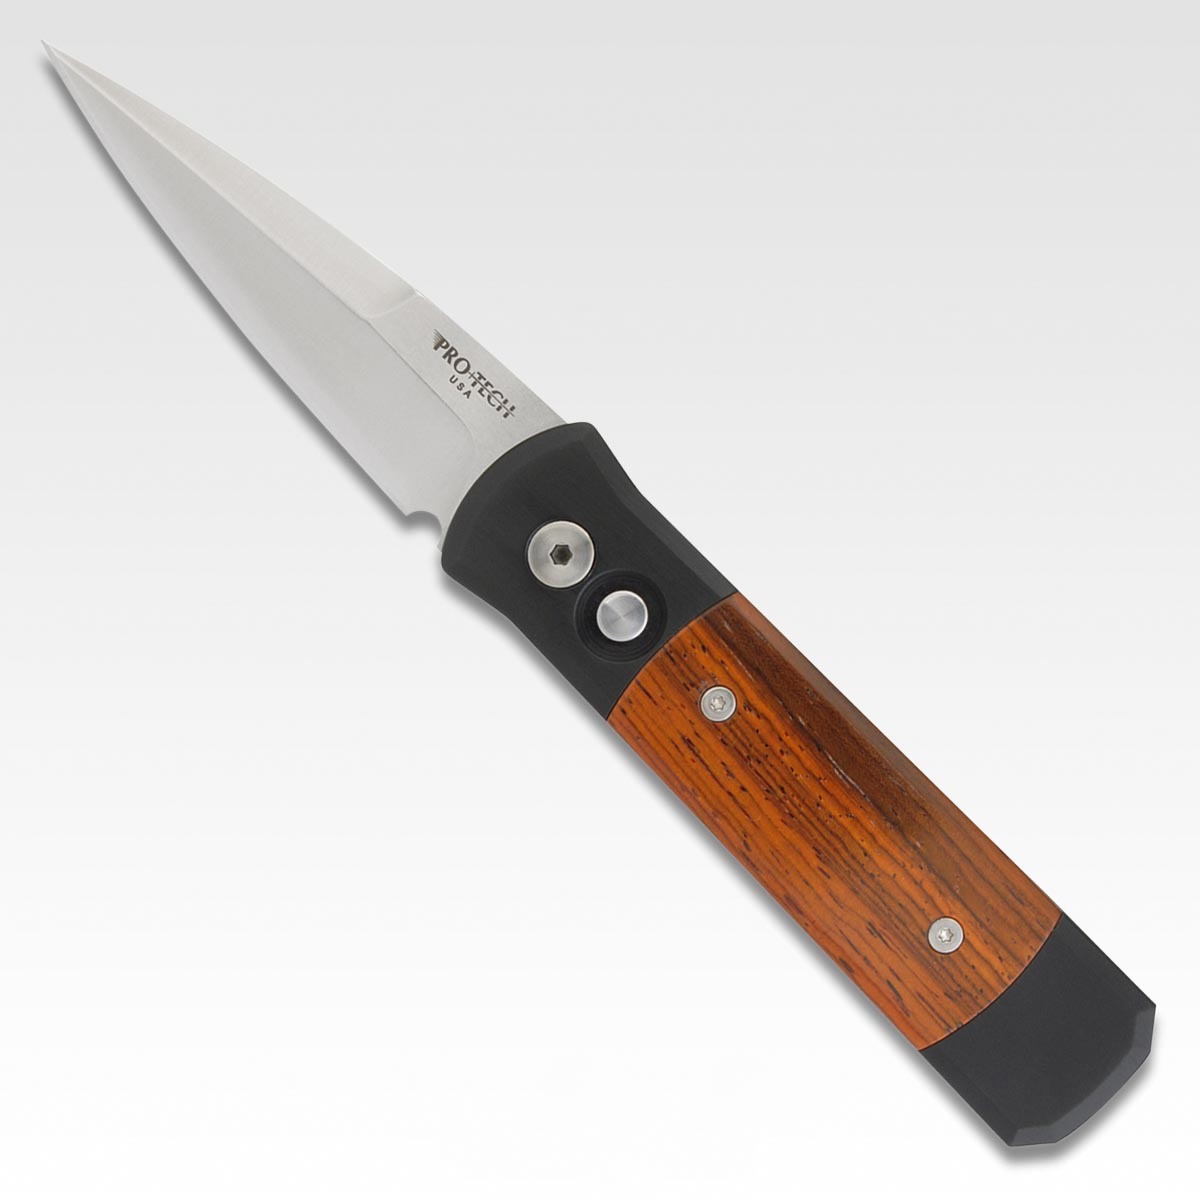 Складной нож Pro-Tech Godson 706С, сталь 154CM, рукоять алюминий/дерево кокоболо - фото 6